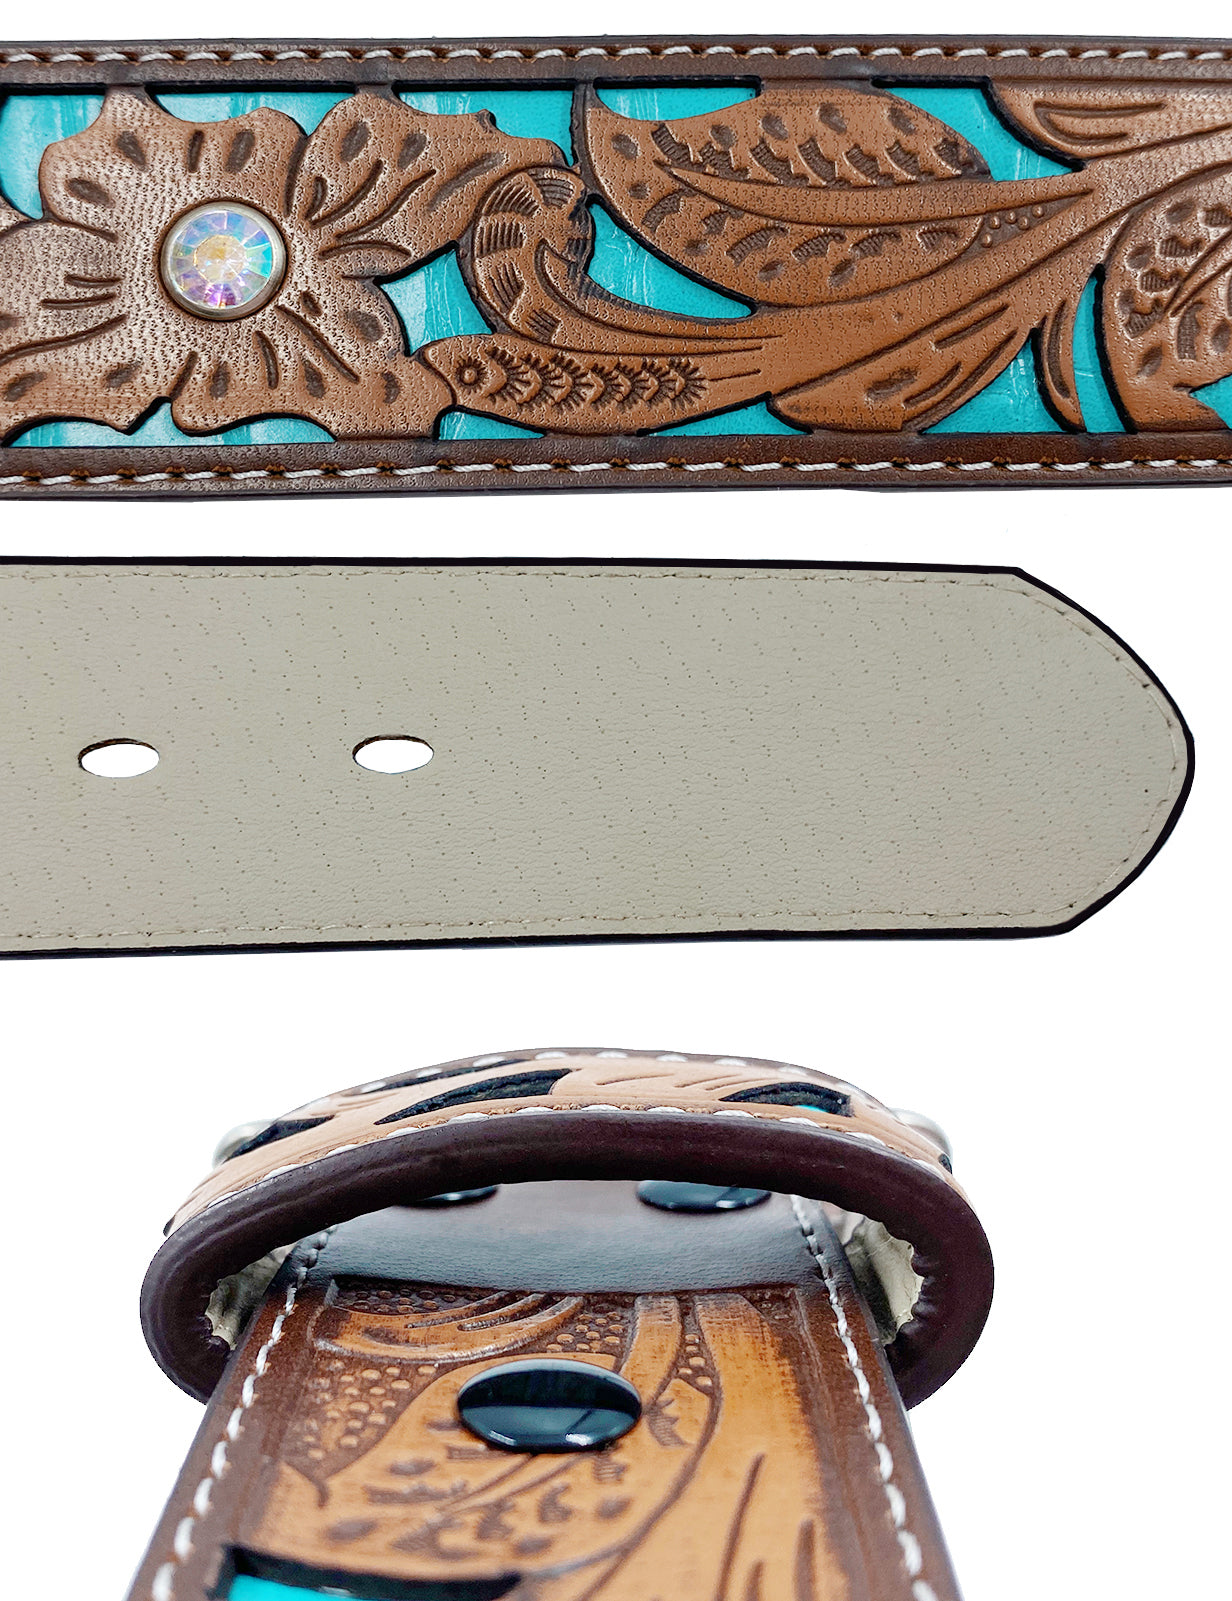 TOPACC Western Turquoise Belts - Deer American flag Belt Buckle Copper/Bronze